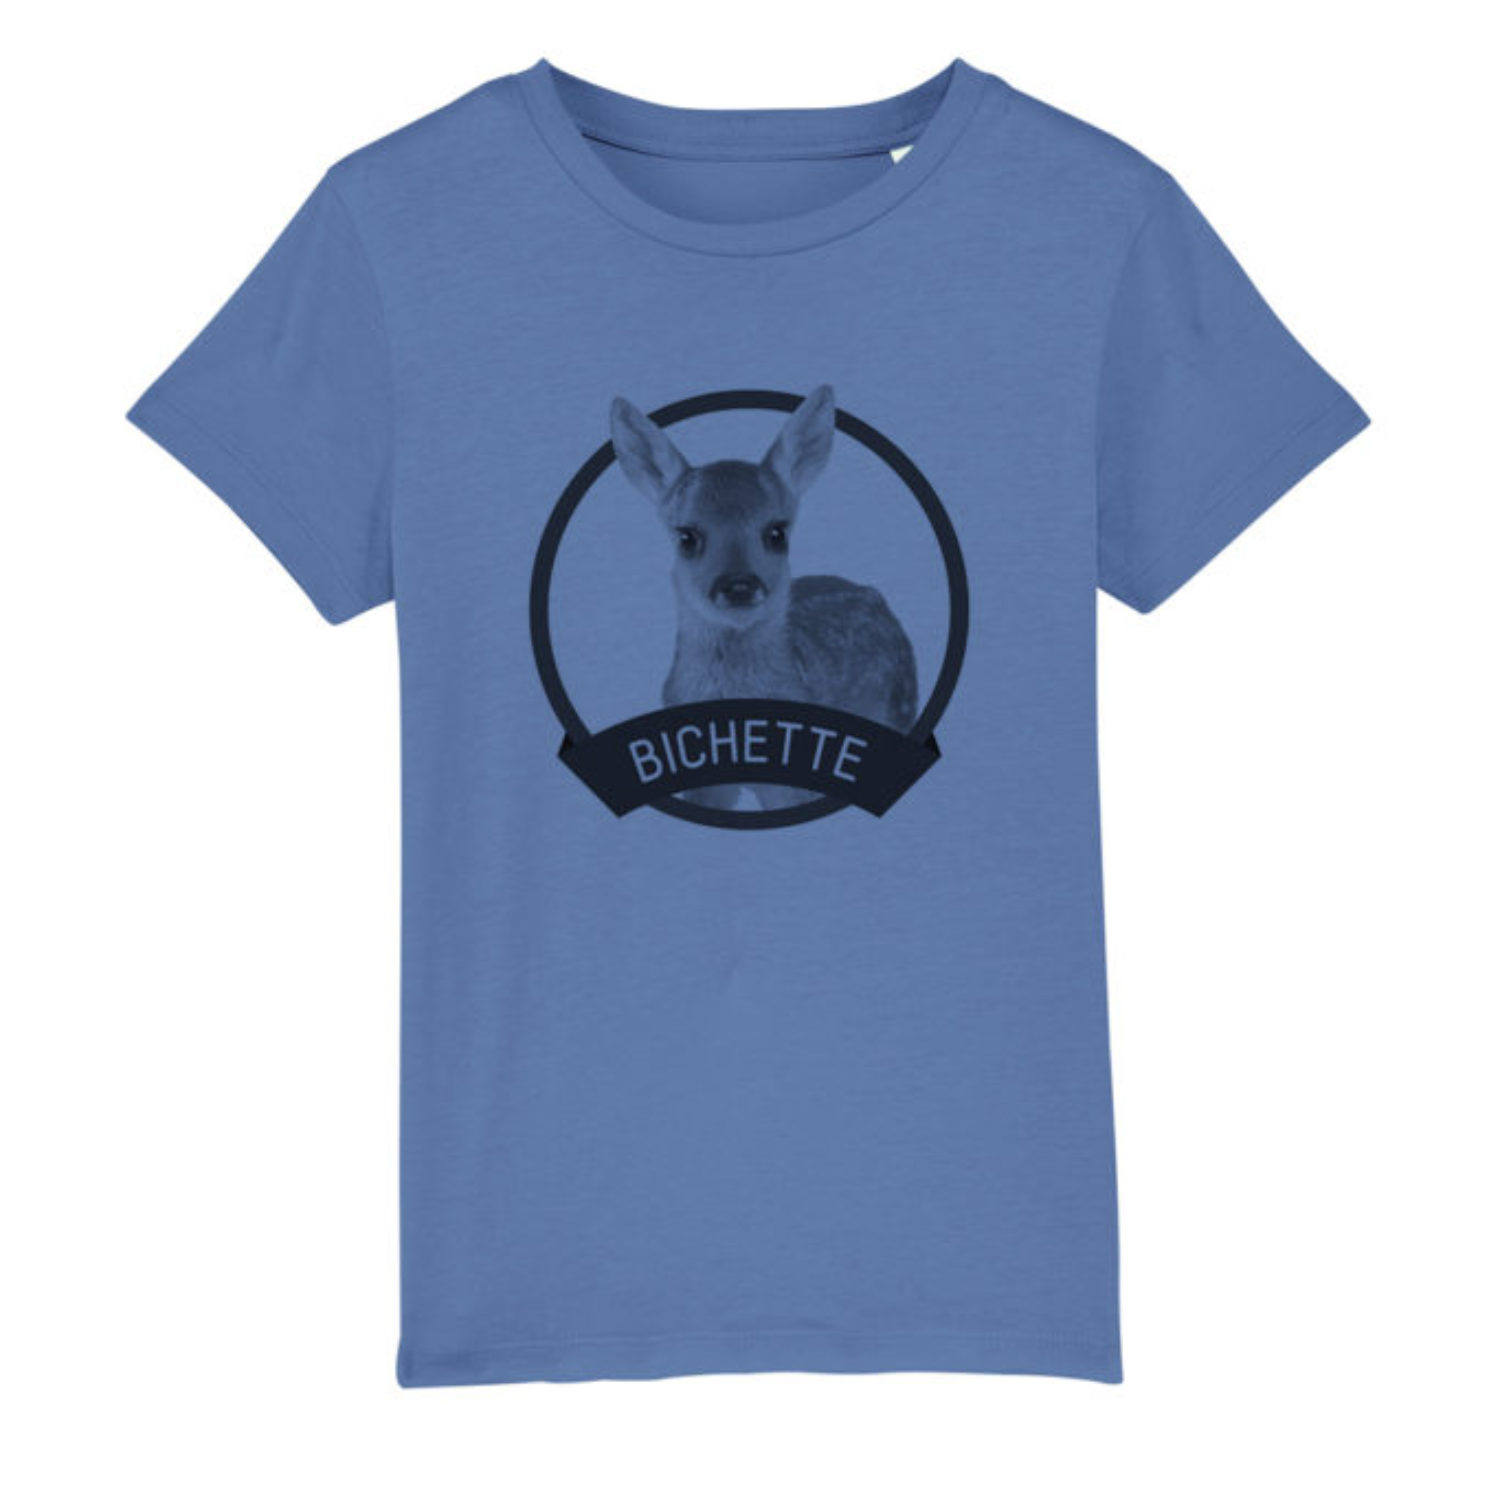 T-shirt enfant - Bichette